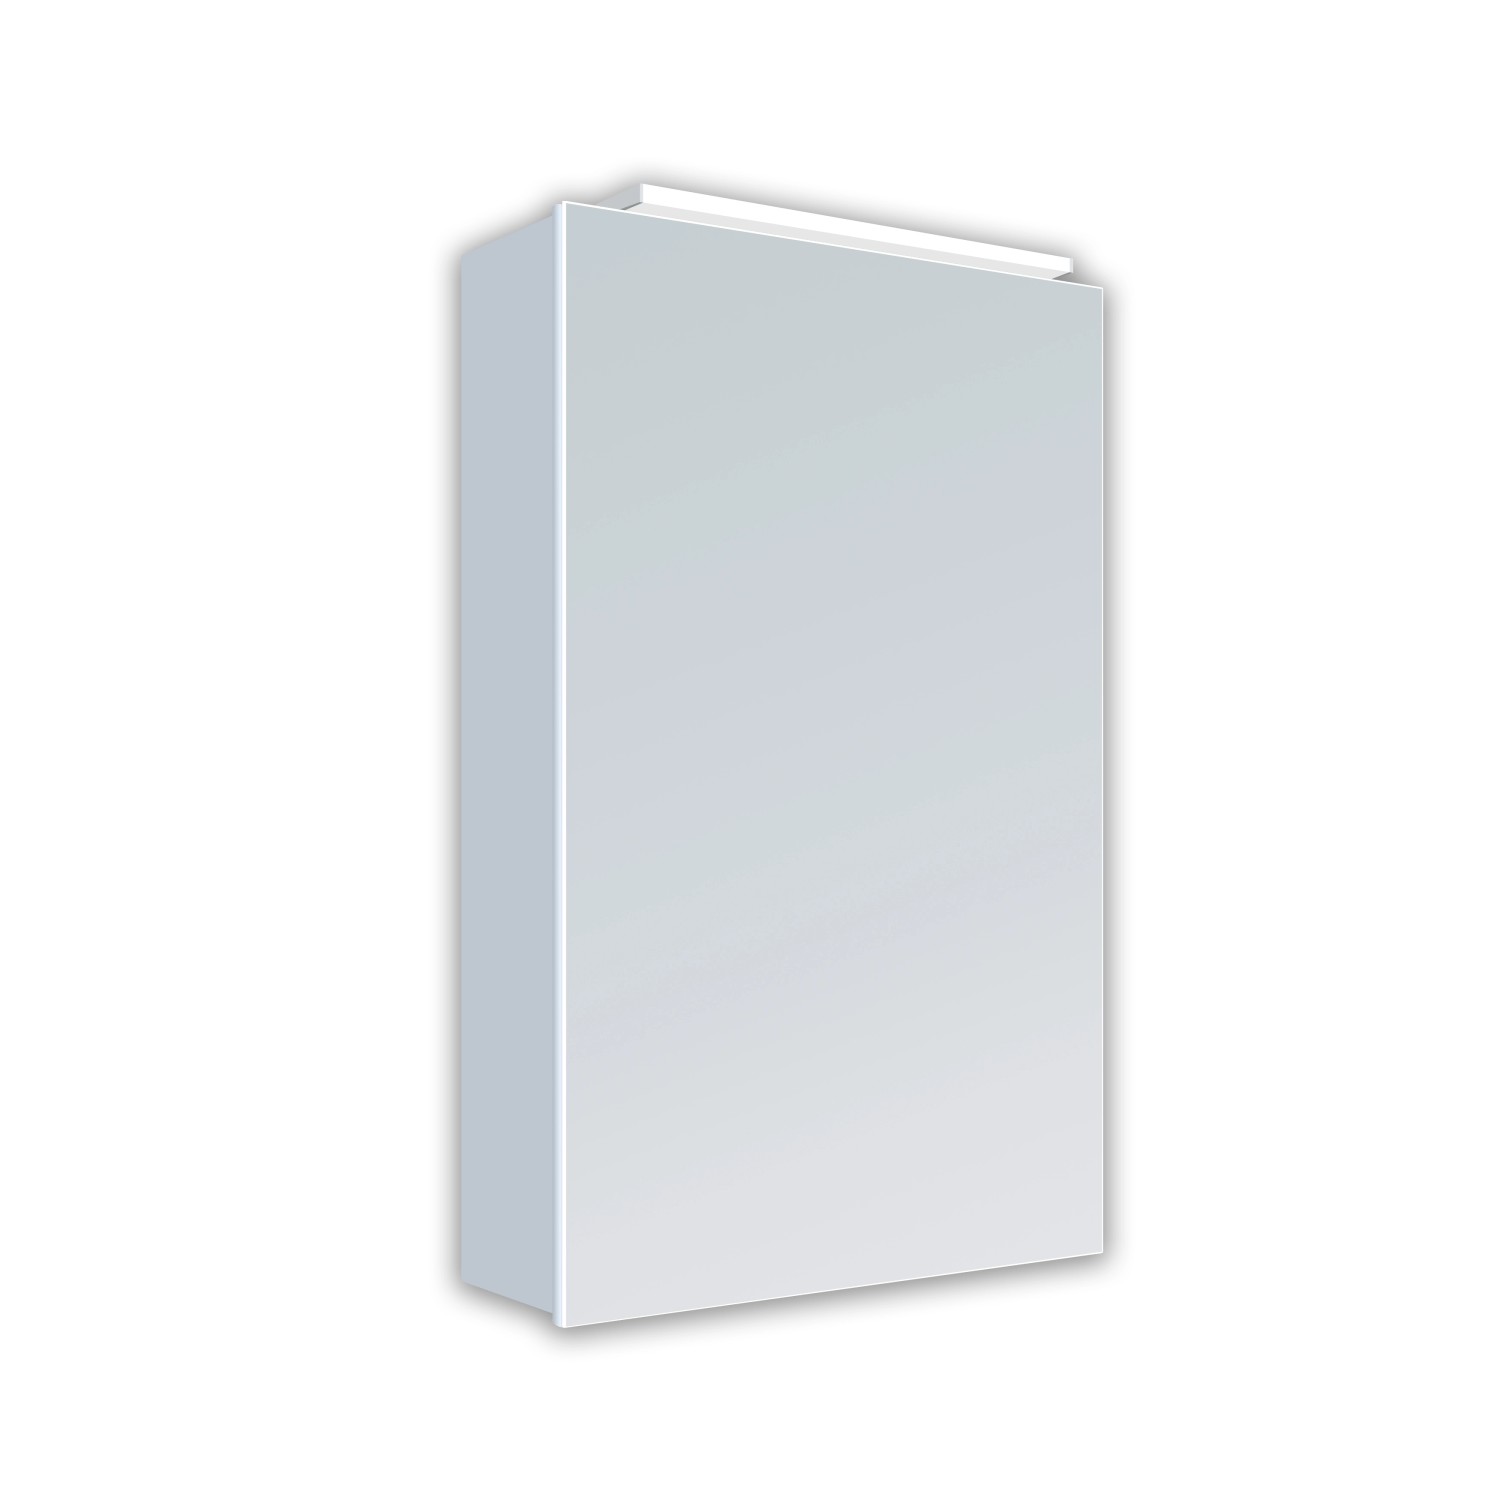 OBI Vegas DSK Aluminio Spiegelschrank cm Alufarben kaufen bei 40